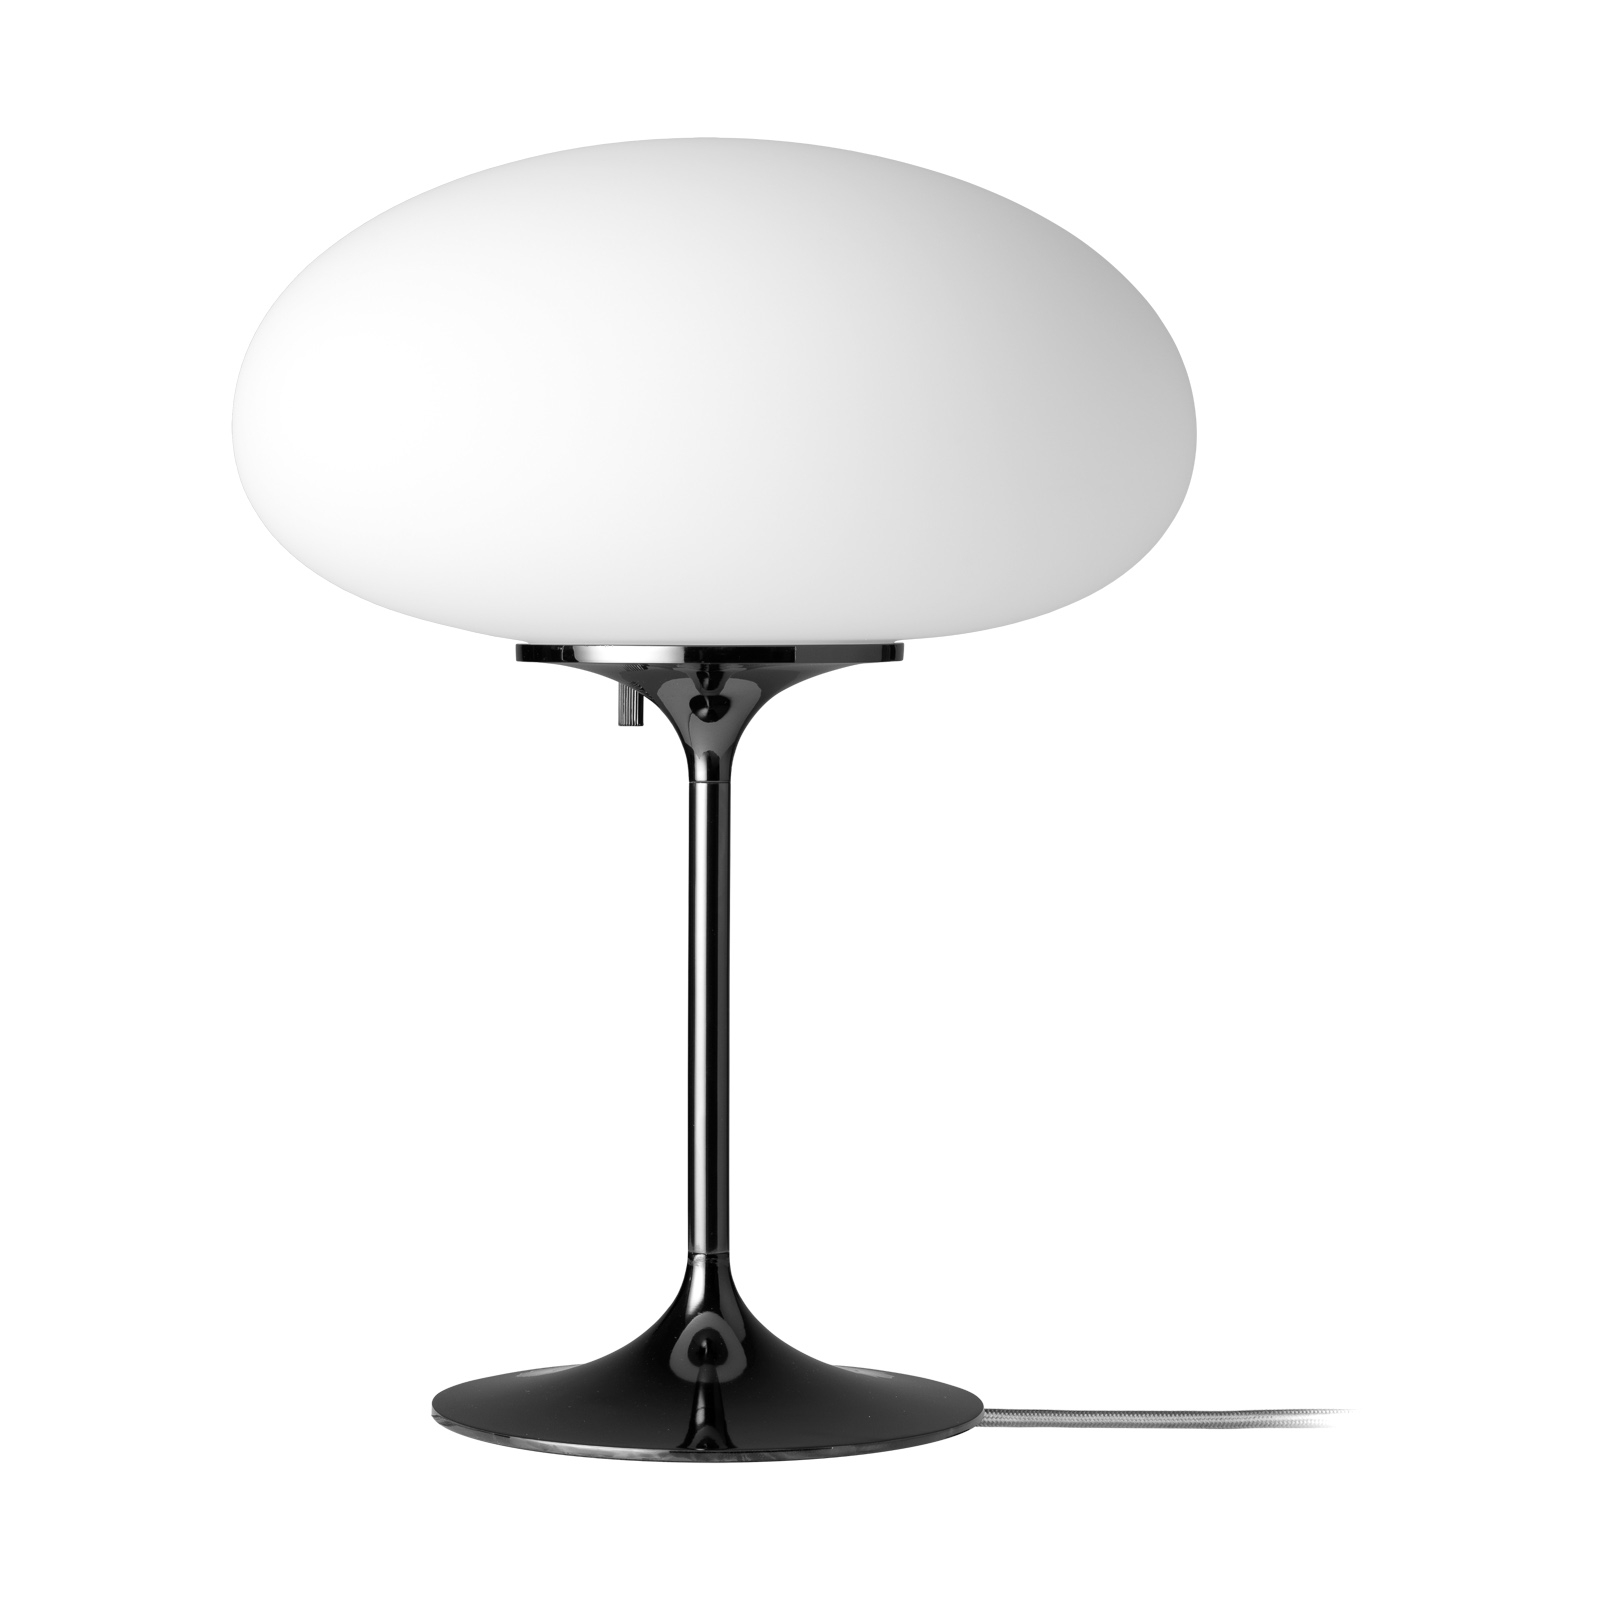 GUBI Stemlite stolná lampa, čierno-chrómová, 42 cm